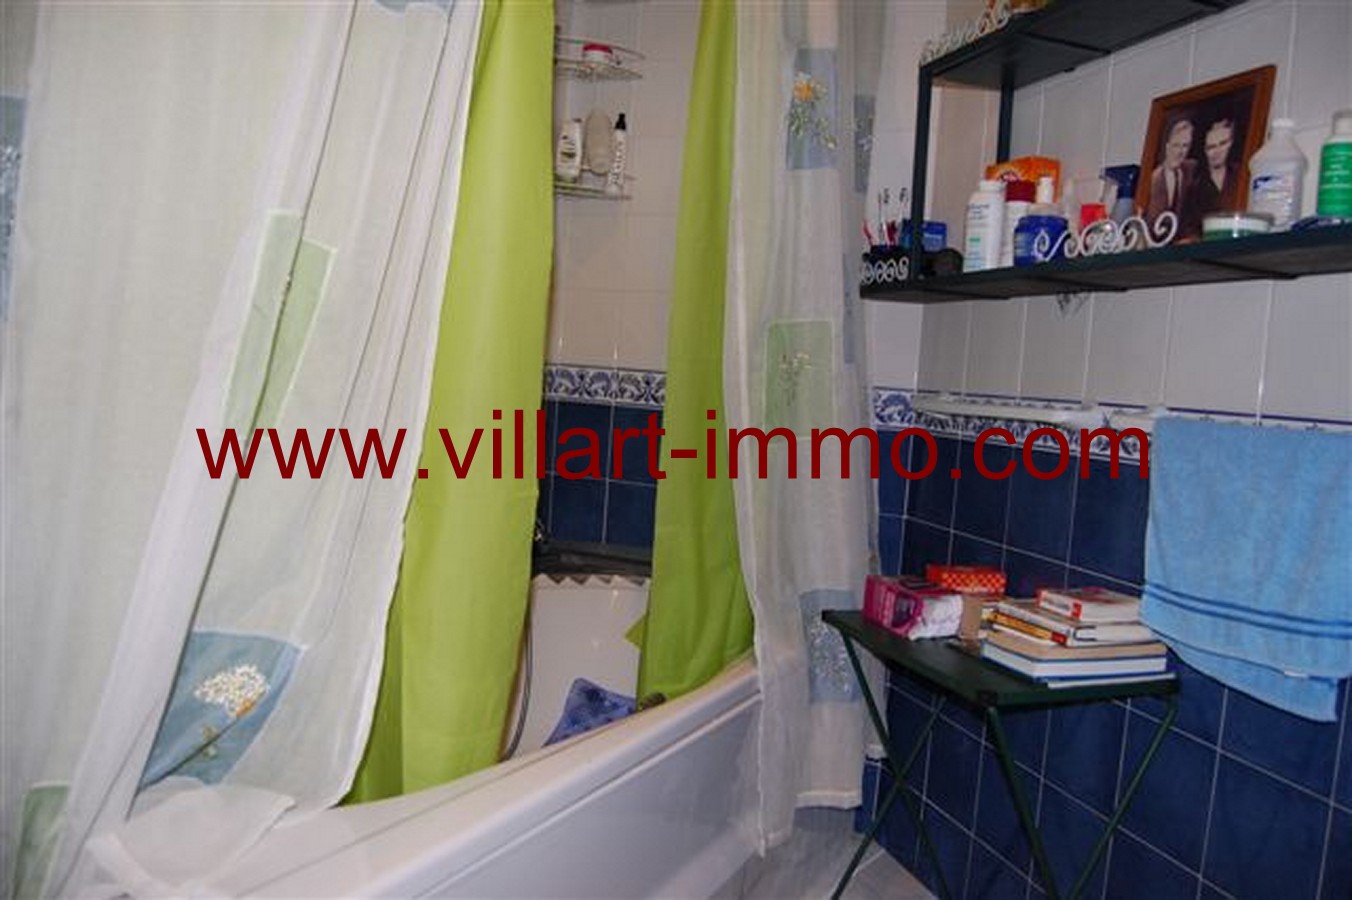 6- Vente -Appartement-Tanger-Maroc–Anejma-Salle-De-Bain-VA26-Villartimmo